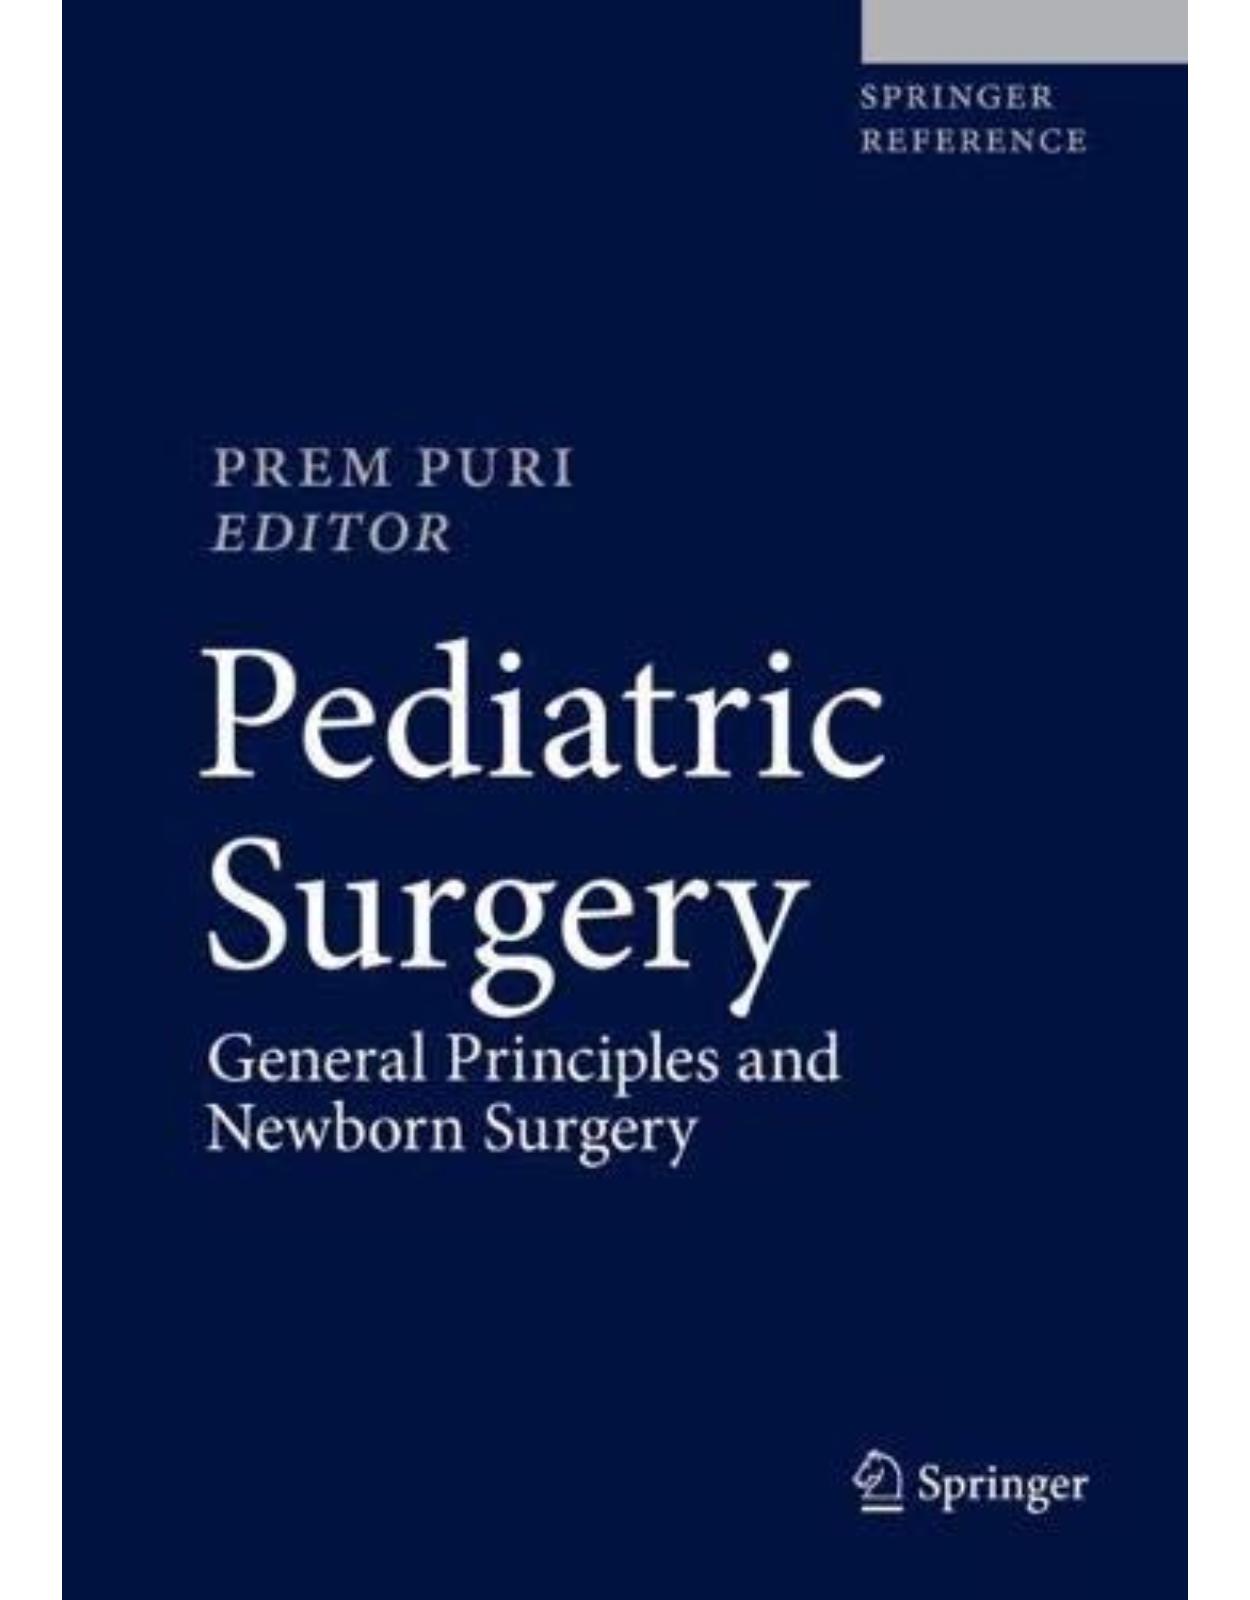 General Principles and Newborn Surgery